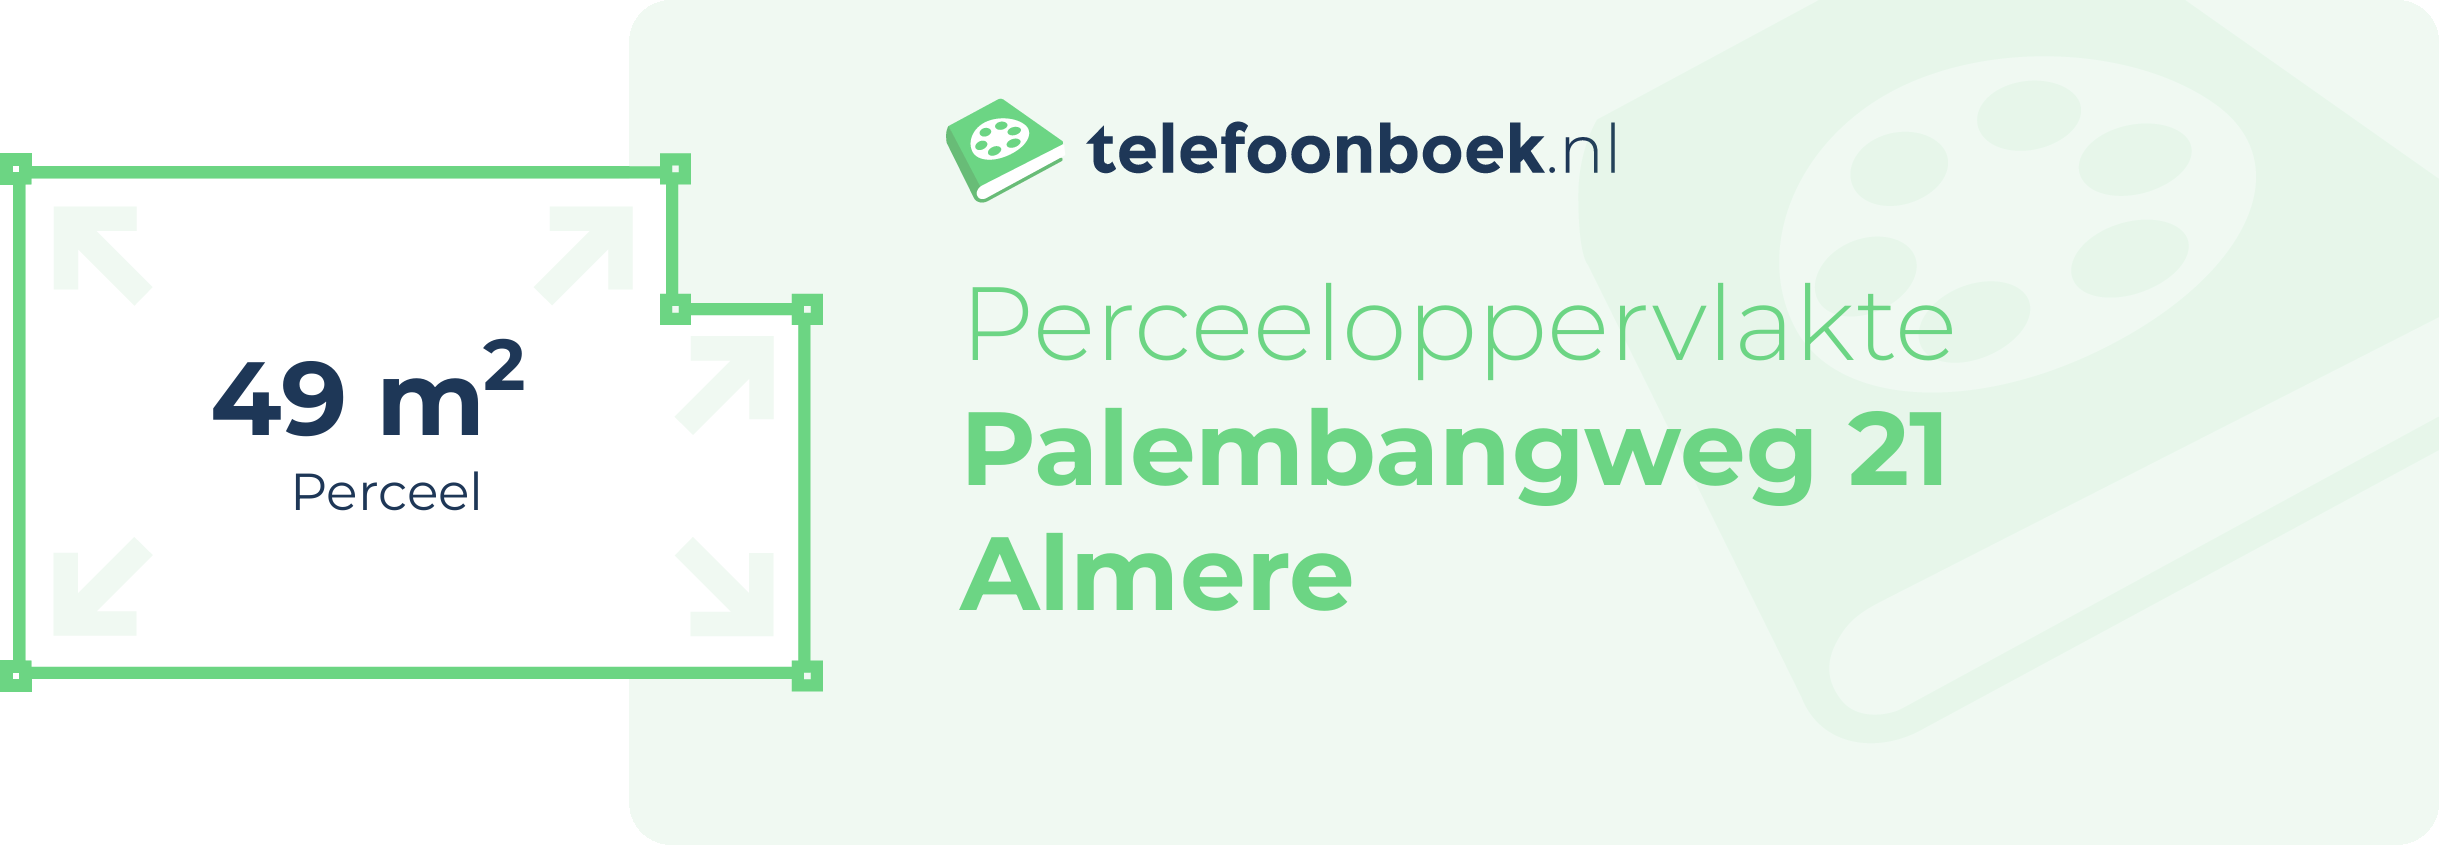 Perceeloppervlakte Palembangweg 21 Almere